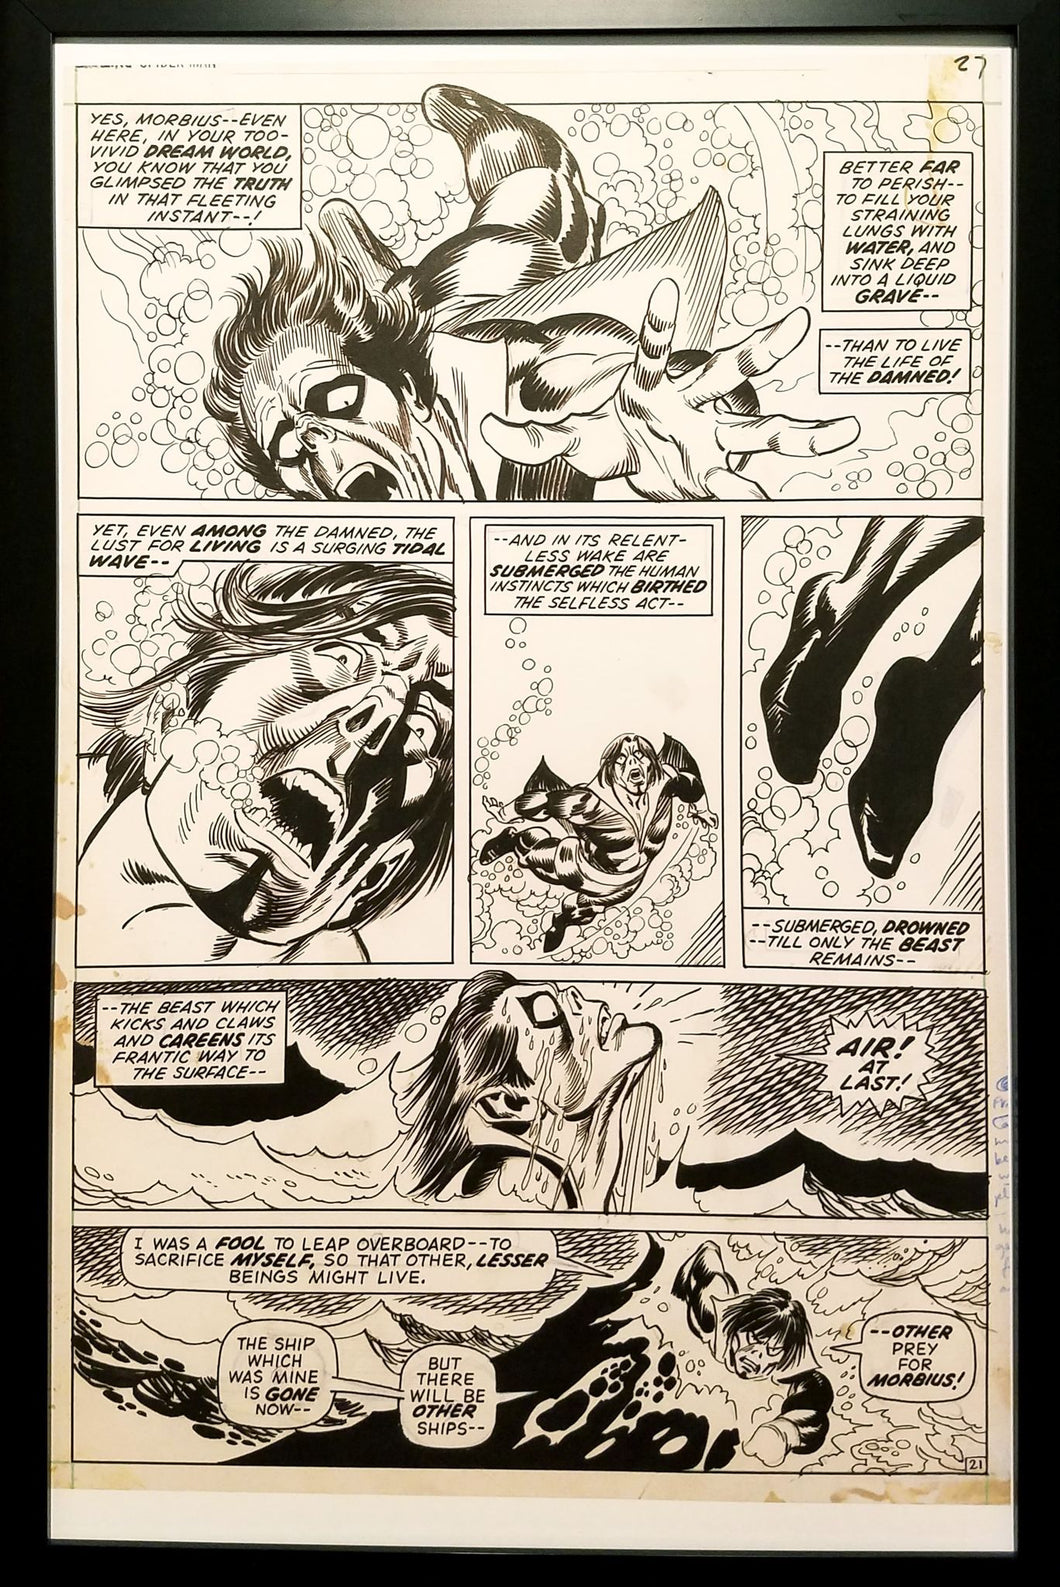 Amazing Spider-Man #102 pg. 21 Gil Kane 11x17 FRAMED Original Art Poster Marvel Comics